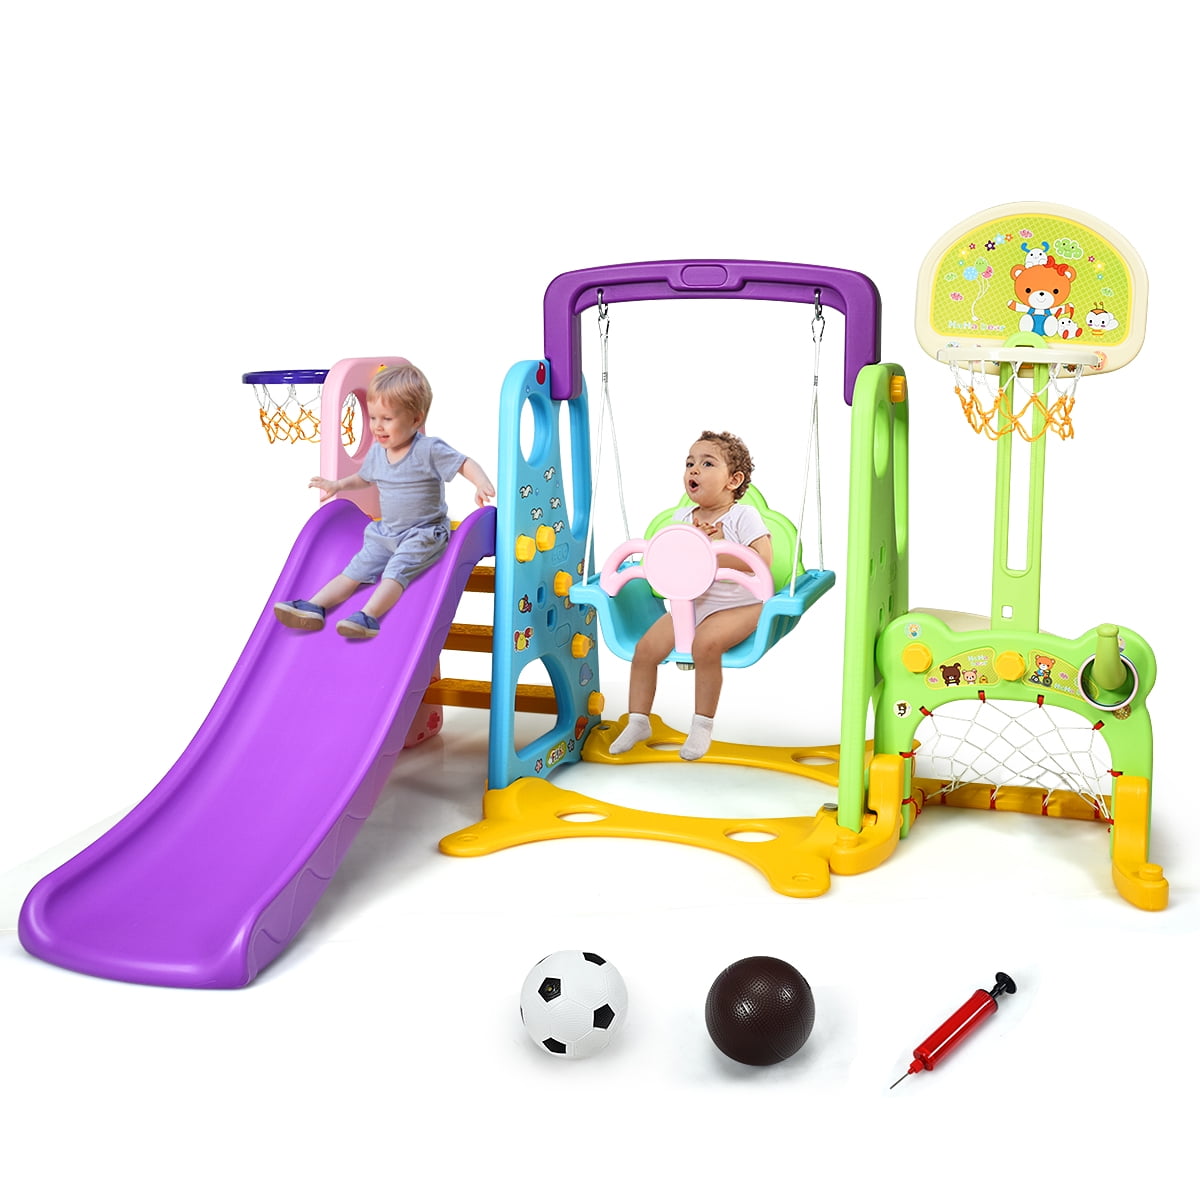 Kids Garden Swing & Slide Climber Set Toddler Baby Indoor Outdoor Playground Toy 